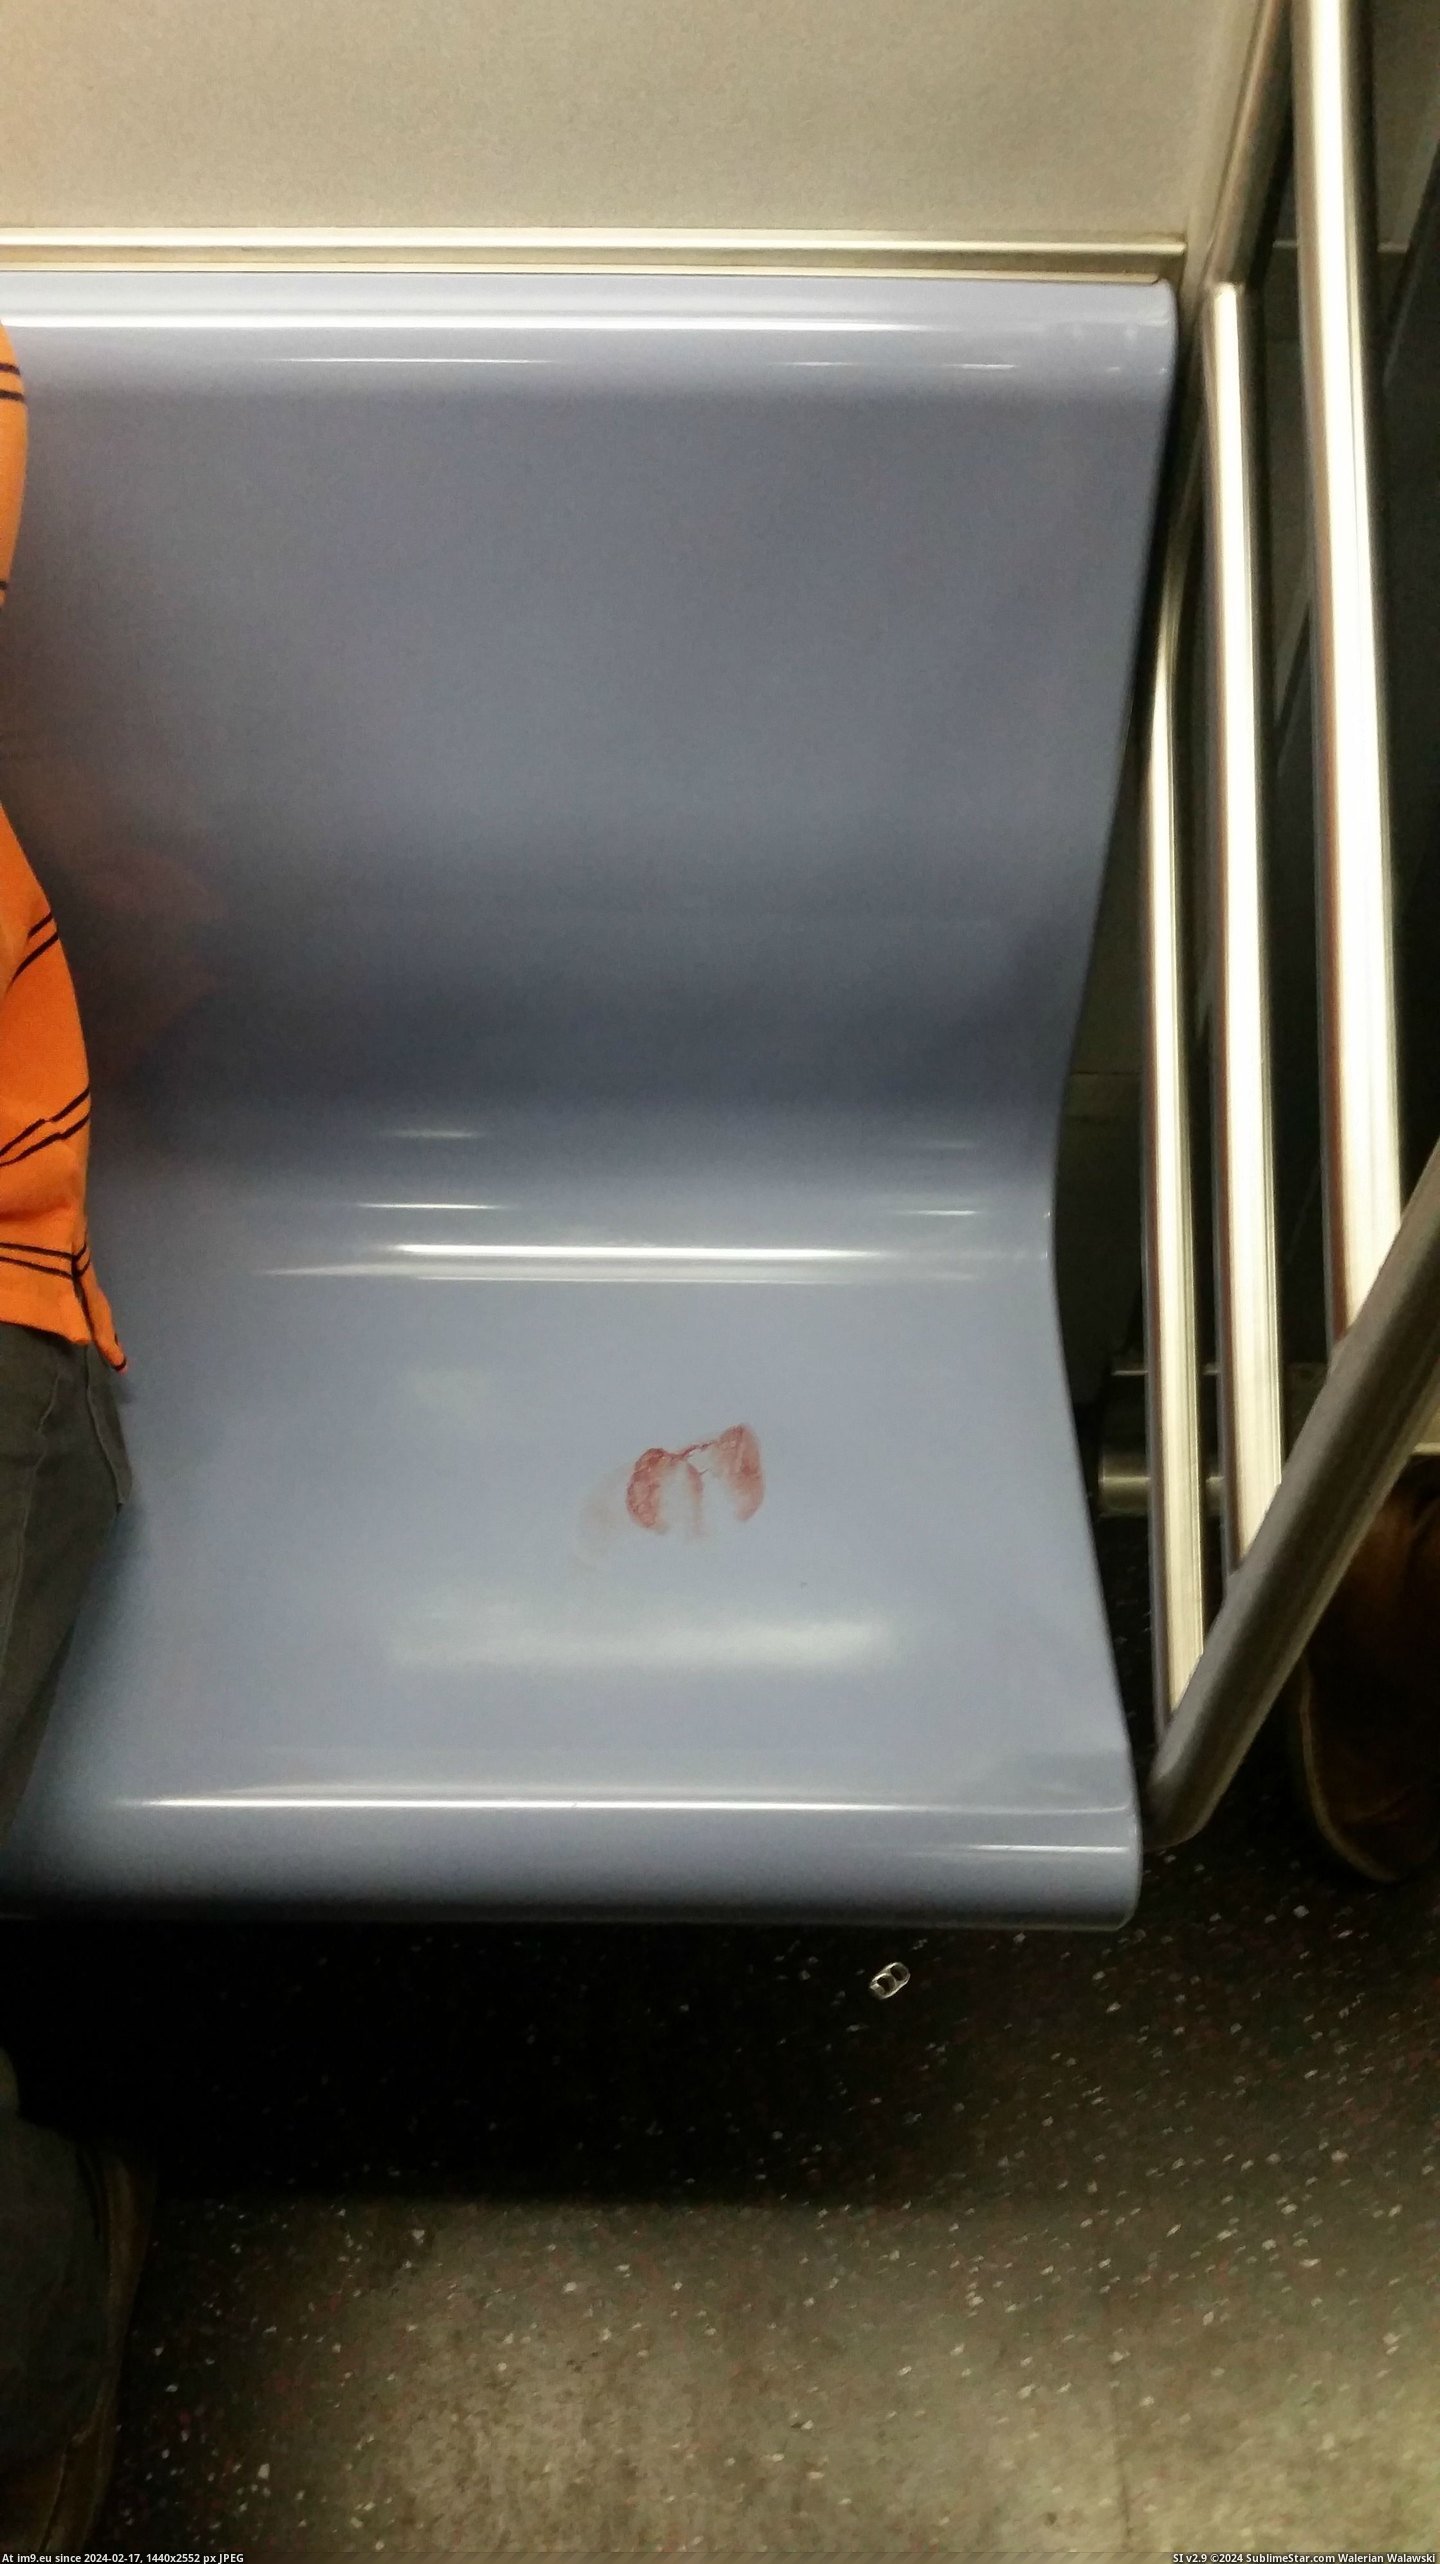 #Wtf #Kiss #Subway #Sealed #Seat #Kinda [Wtf] Subway seat sealed with a kiss, kinda. Pic. (Obraz z album My r/WTF favs))